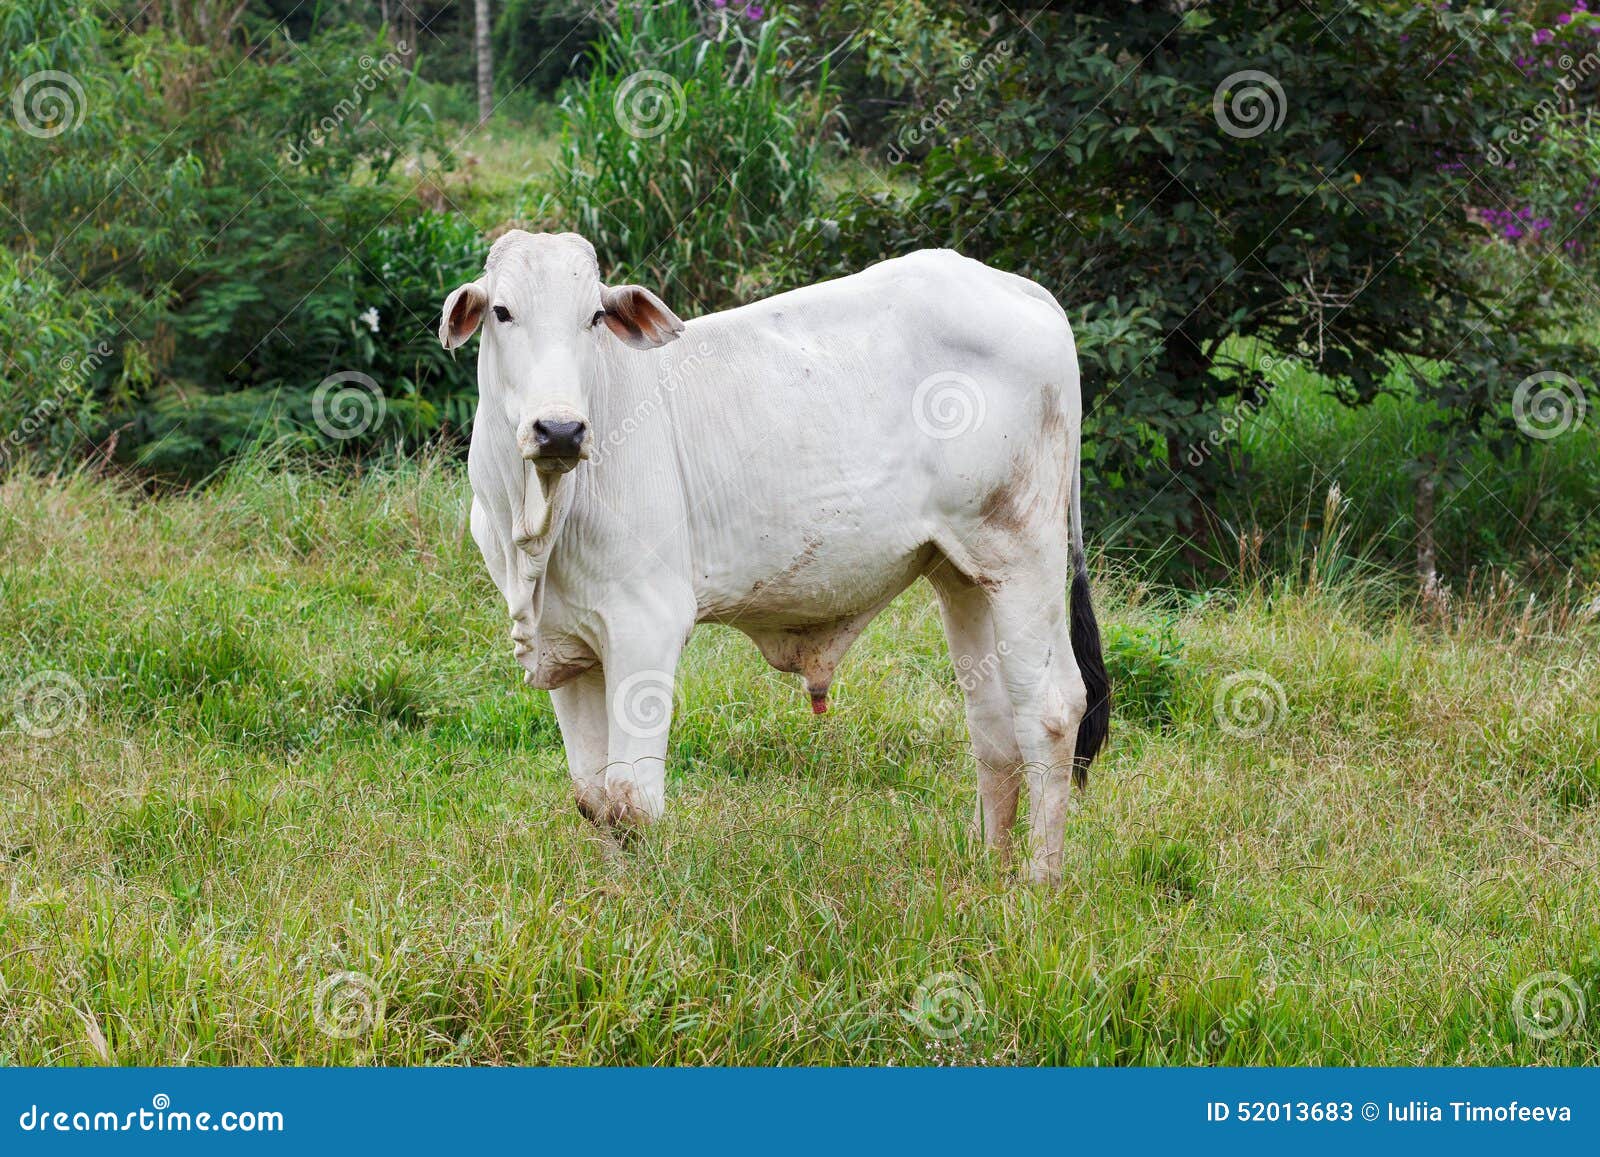 nellore - brazilian beef cattle in field, white bull